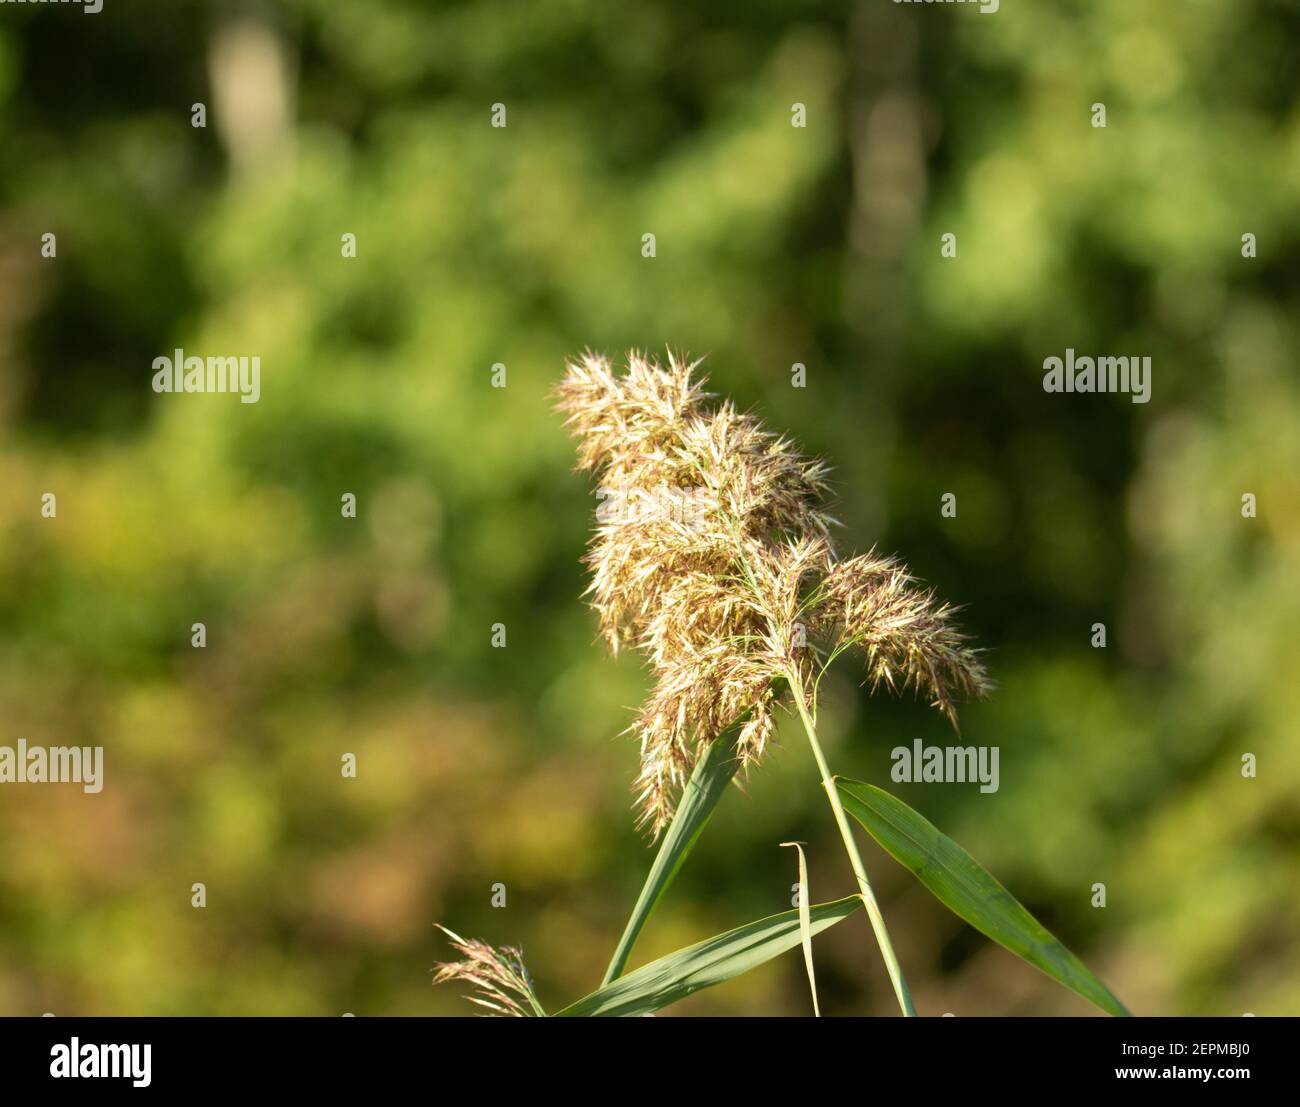 marsh sedge plant flowering against a natural background Stock Photo